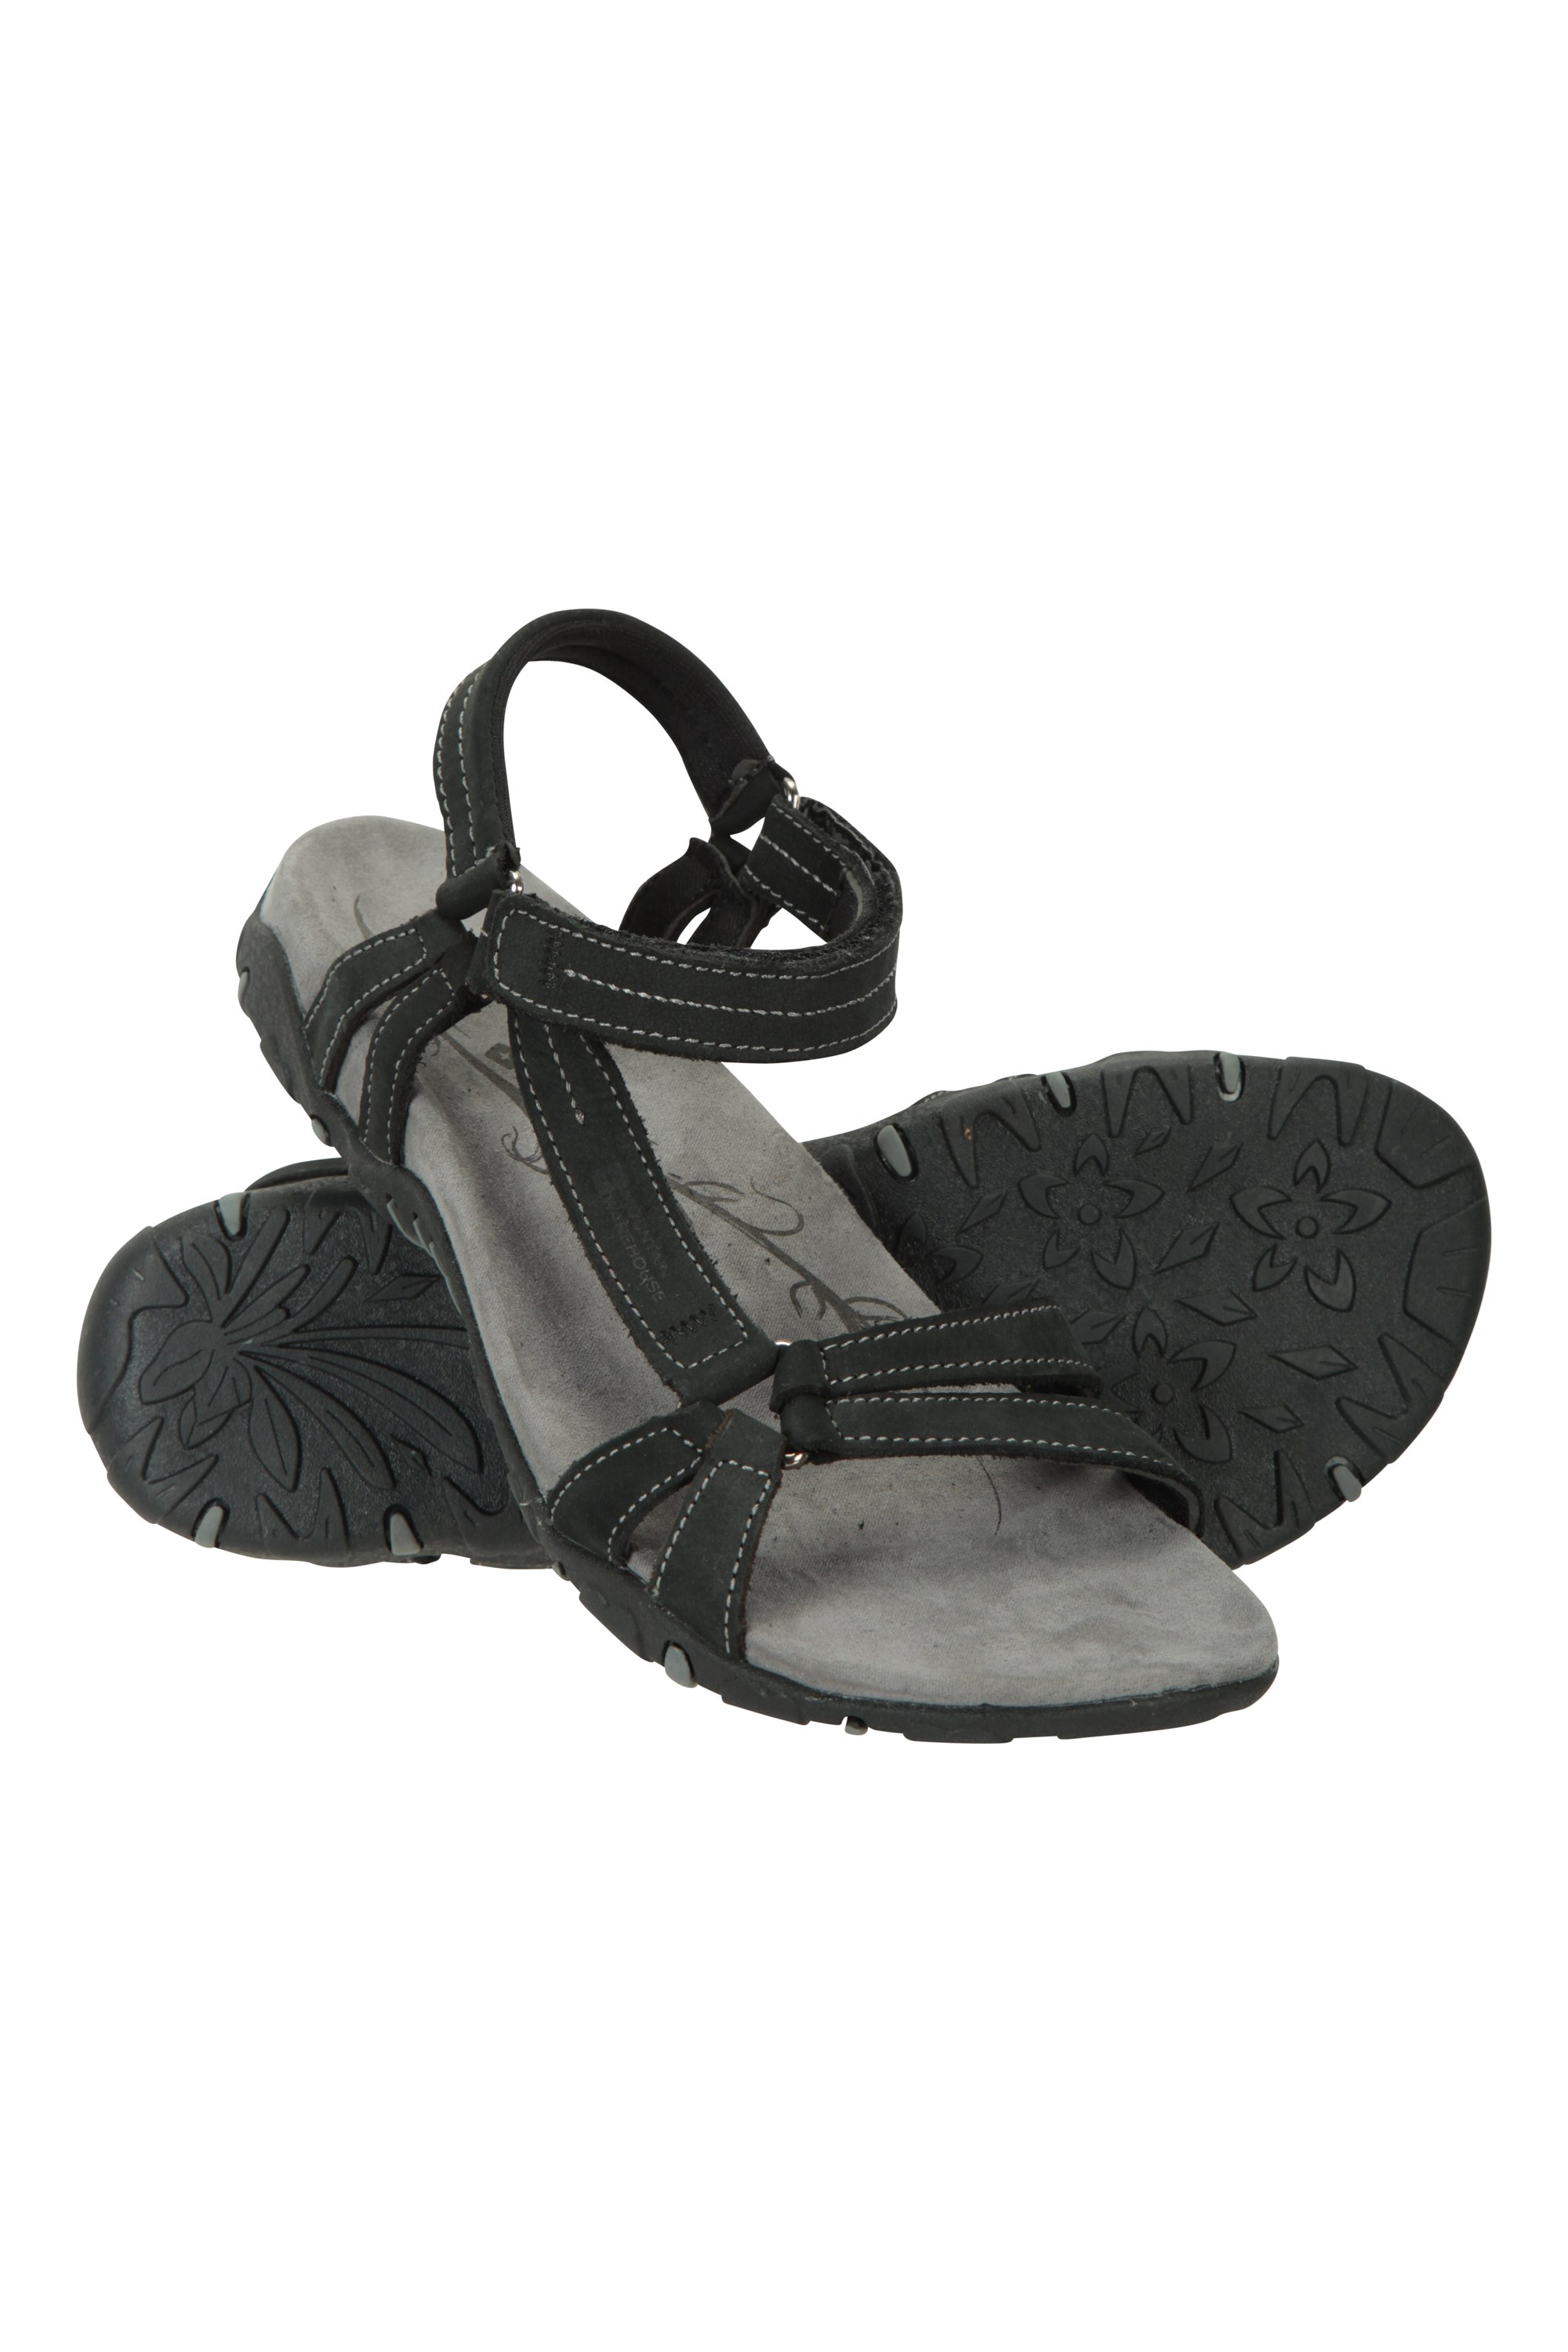 Kokomo Womens Sandals - Black